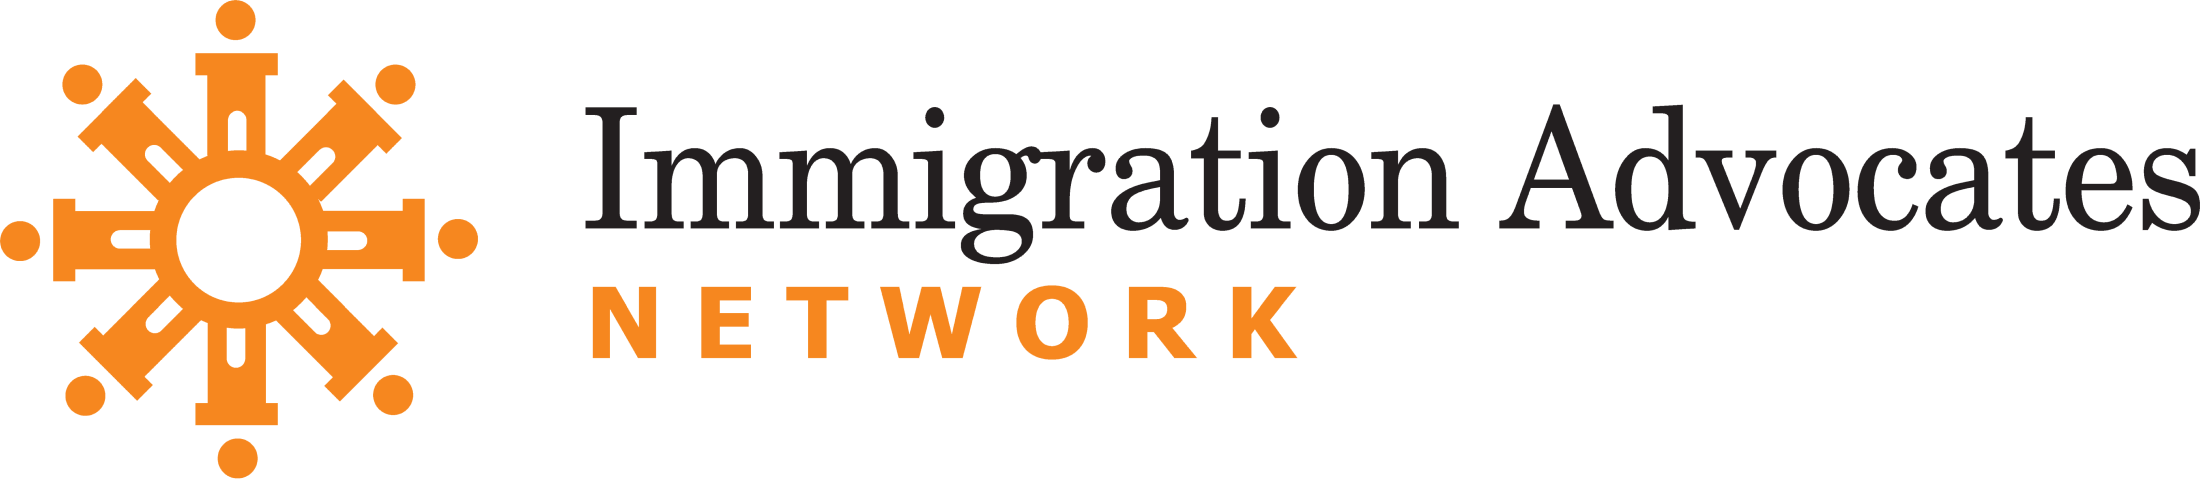 Immigration Advocates Network